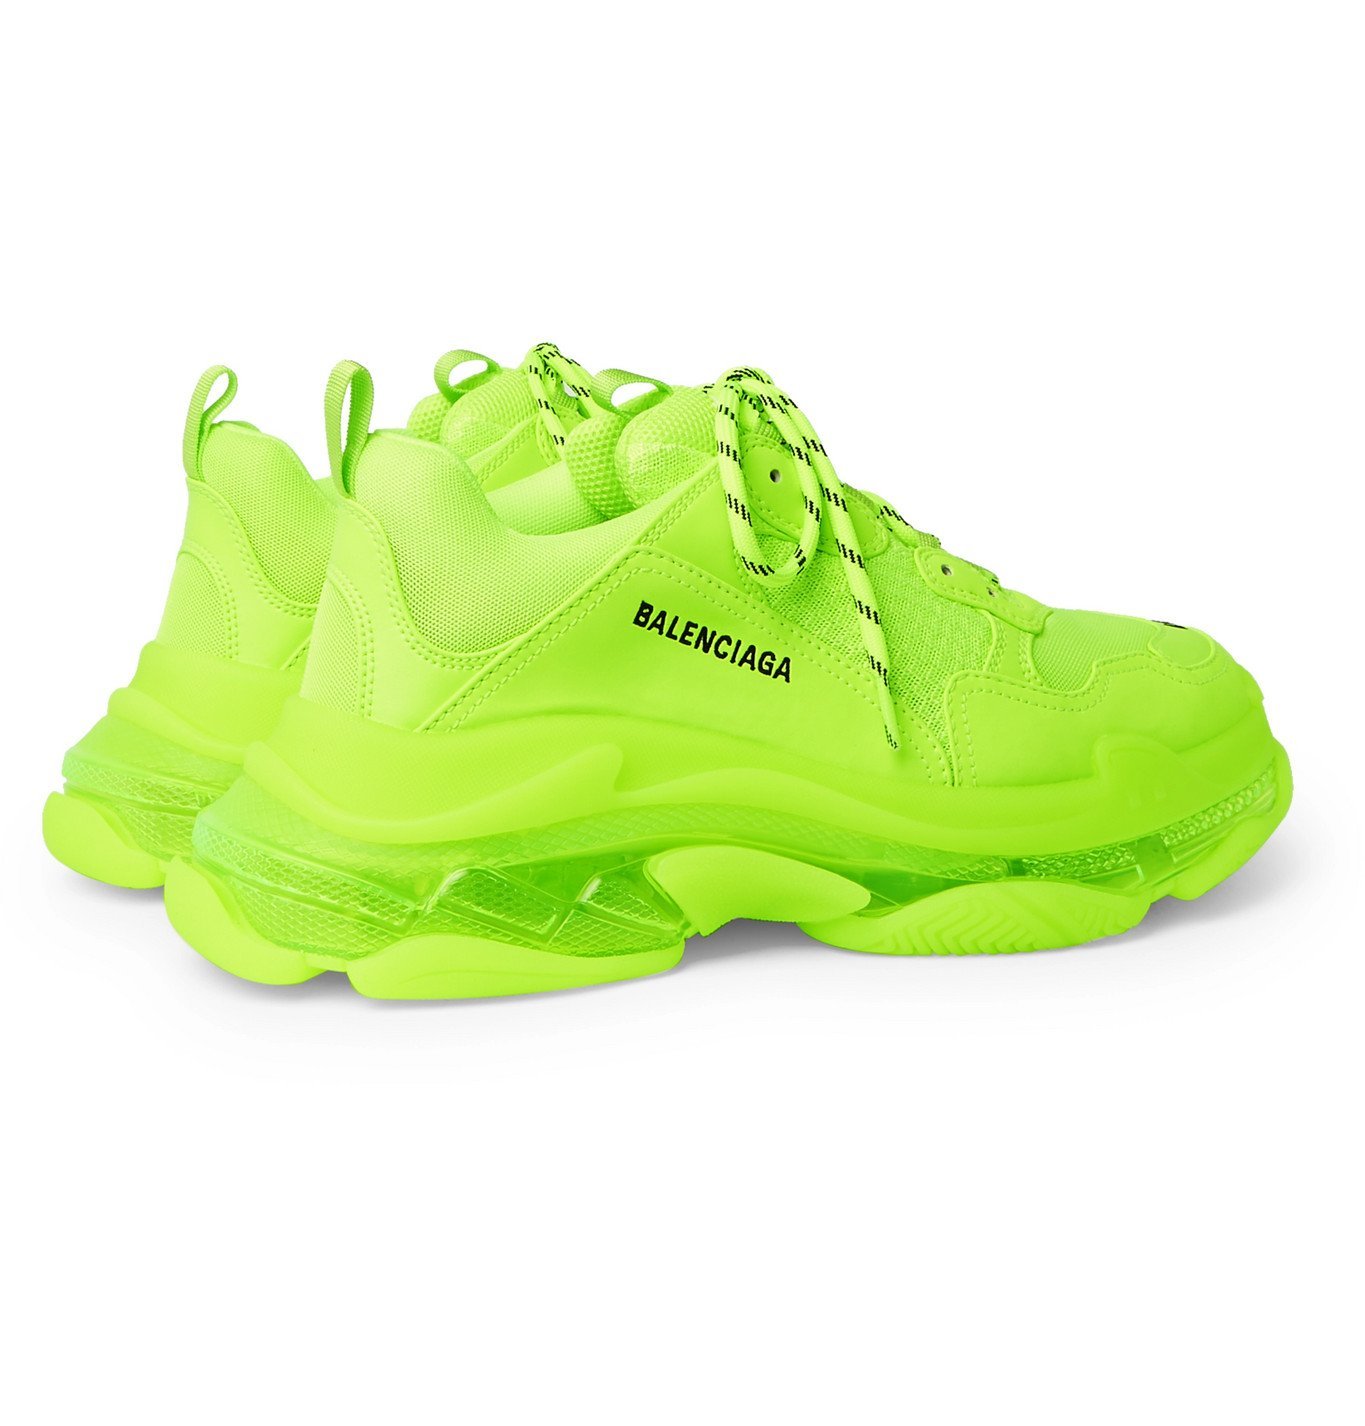 BALENCIAGA - Triple S Neon Mesh and Leather Sneakers - Yellow Balenciaga